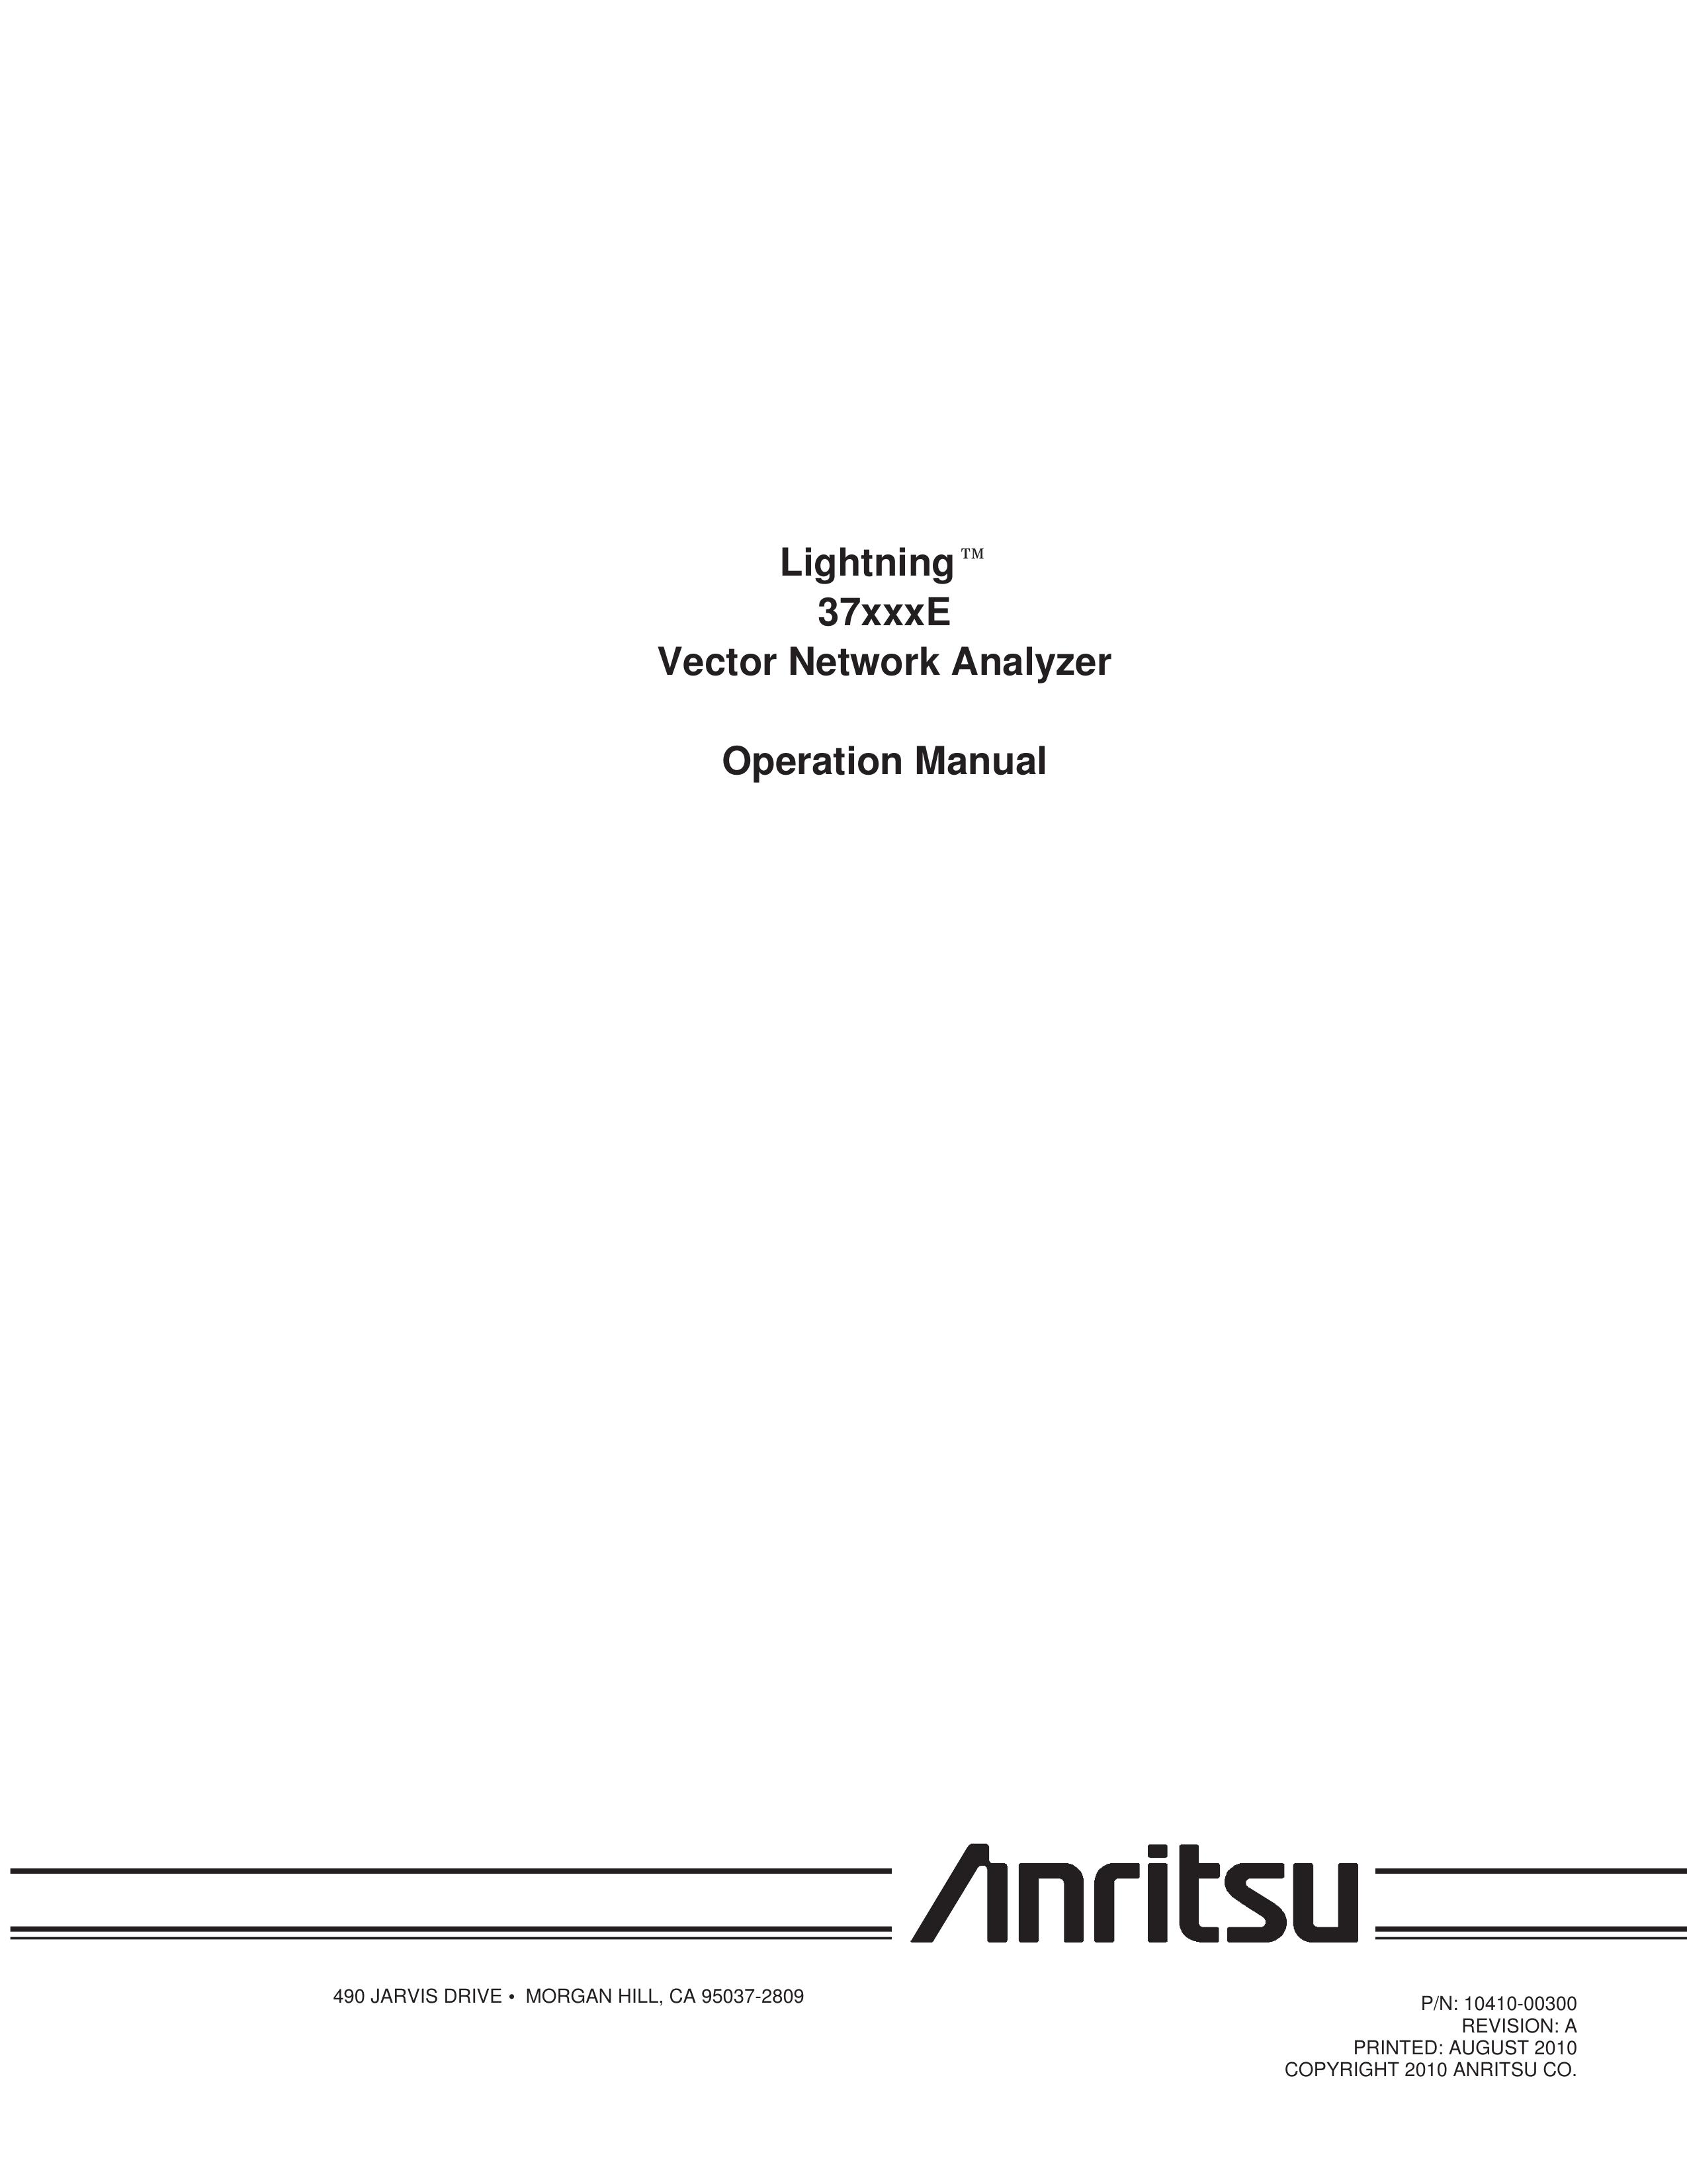 Anritsu 37xxxE Marine Lighting User Manual